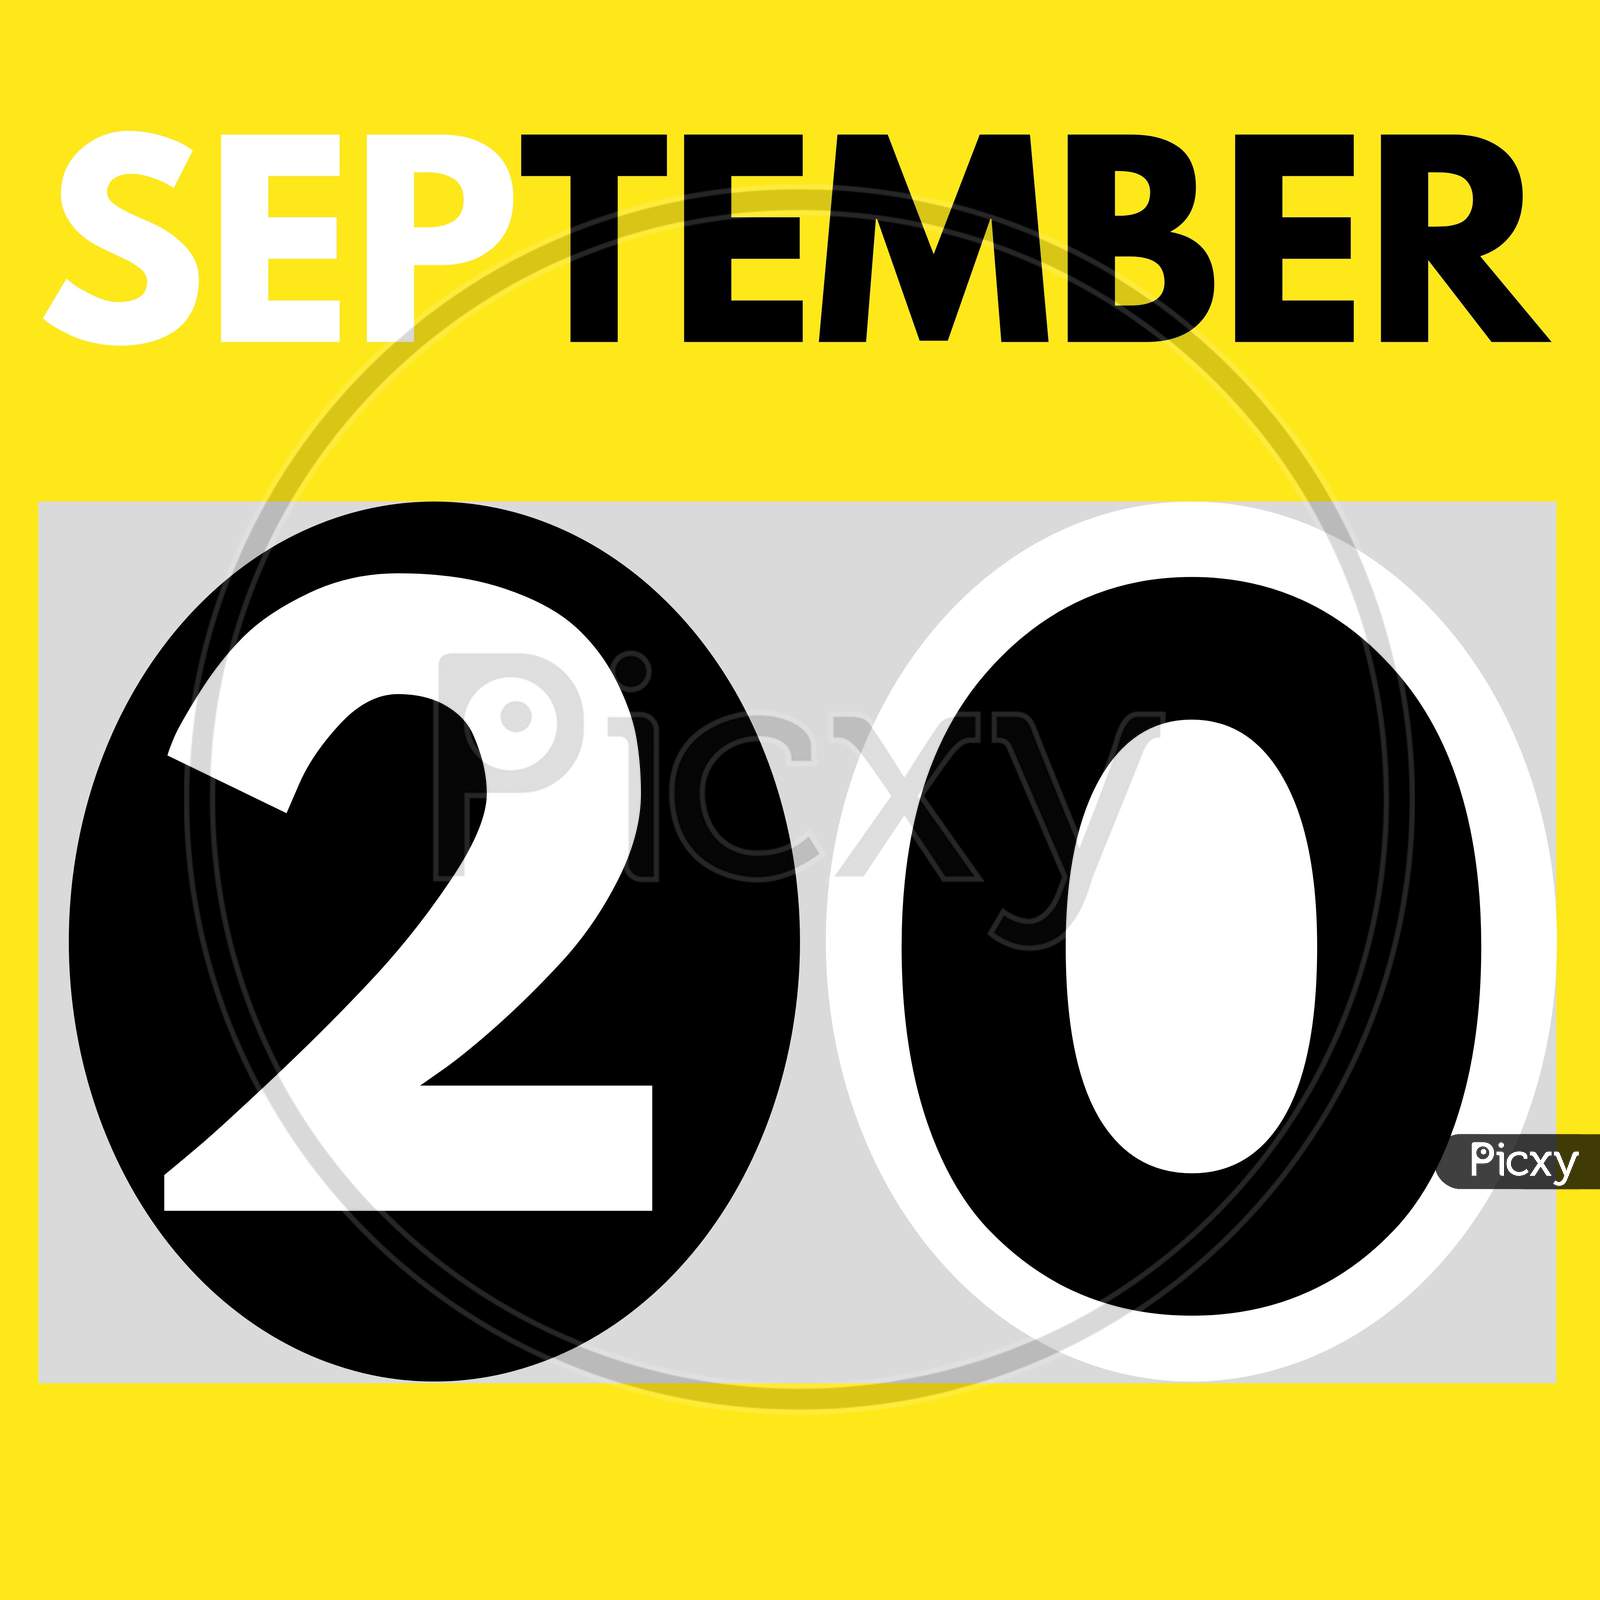 September 20 . Modern Daily Calendar Icon .Date ,Day, Month .Calendar For The Month Of September